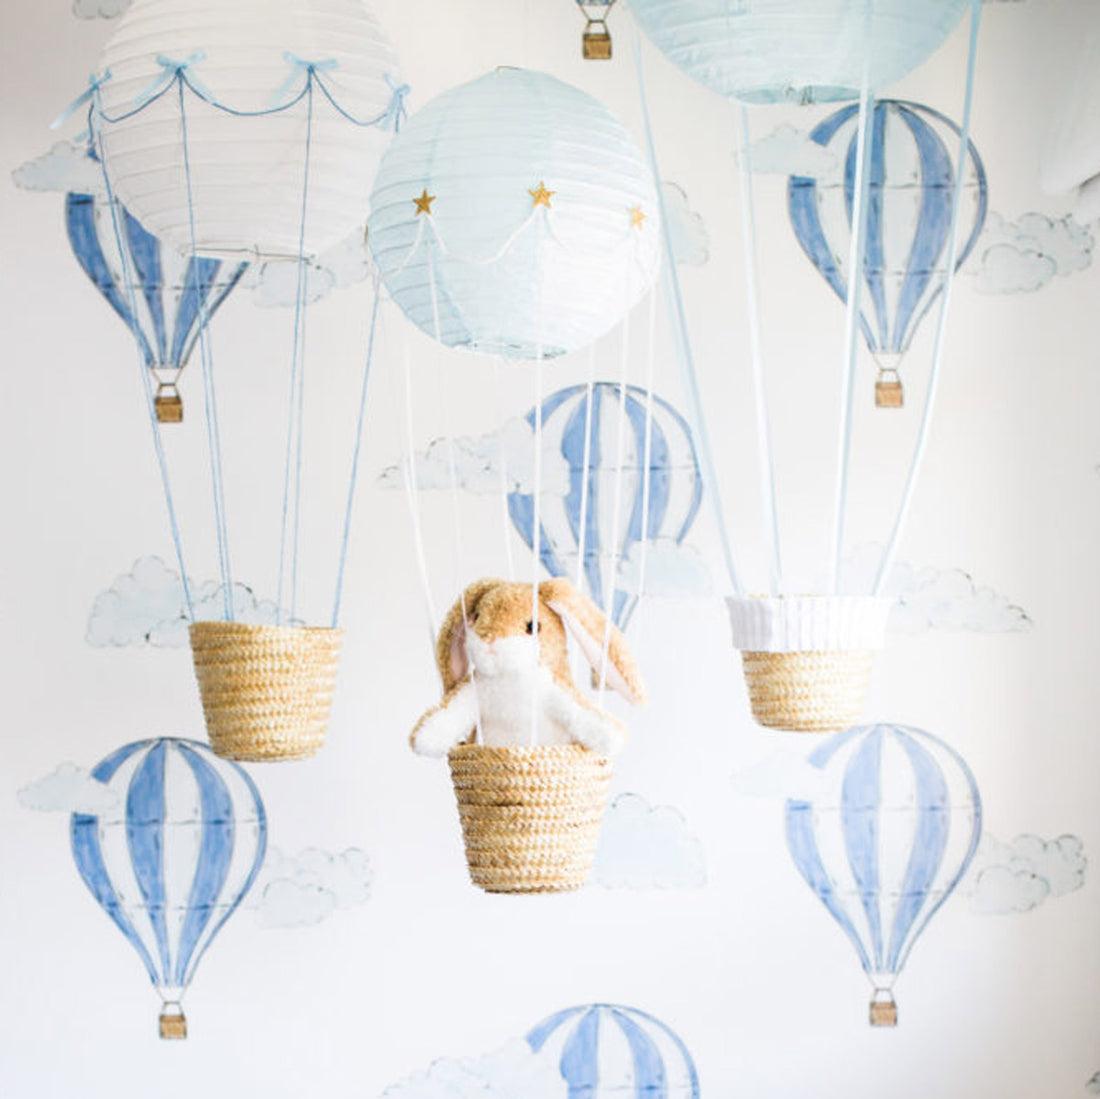 Air Balloon Wallpaper for Mobile 1100x1100